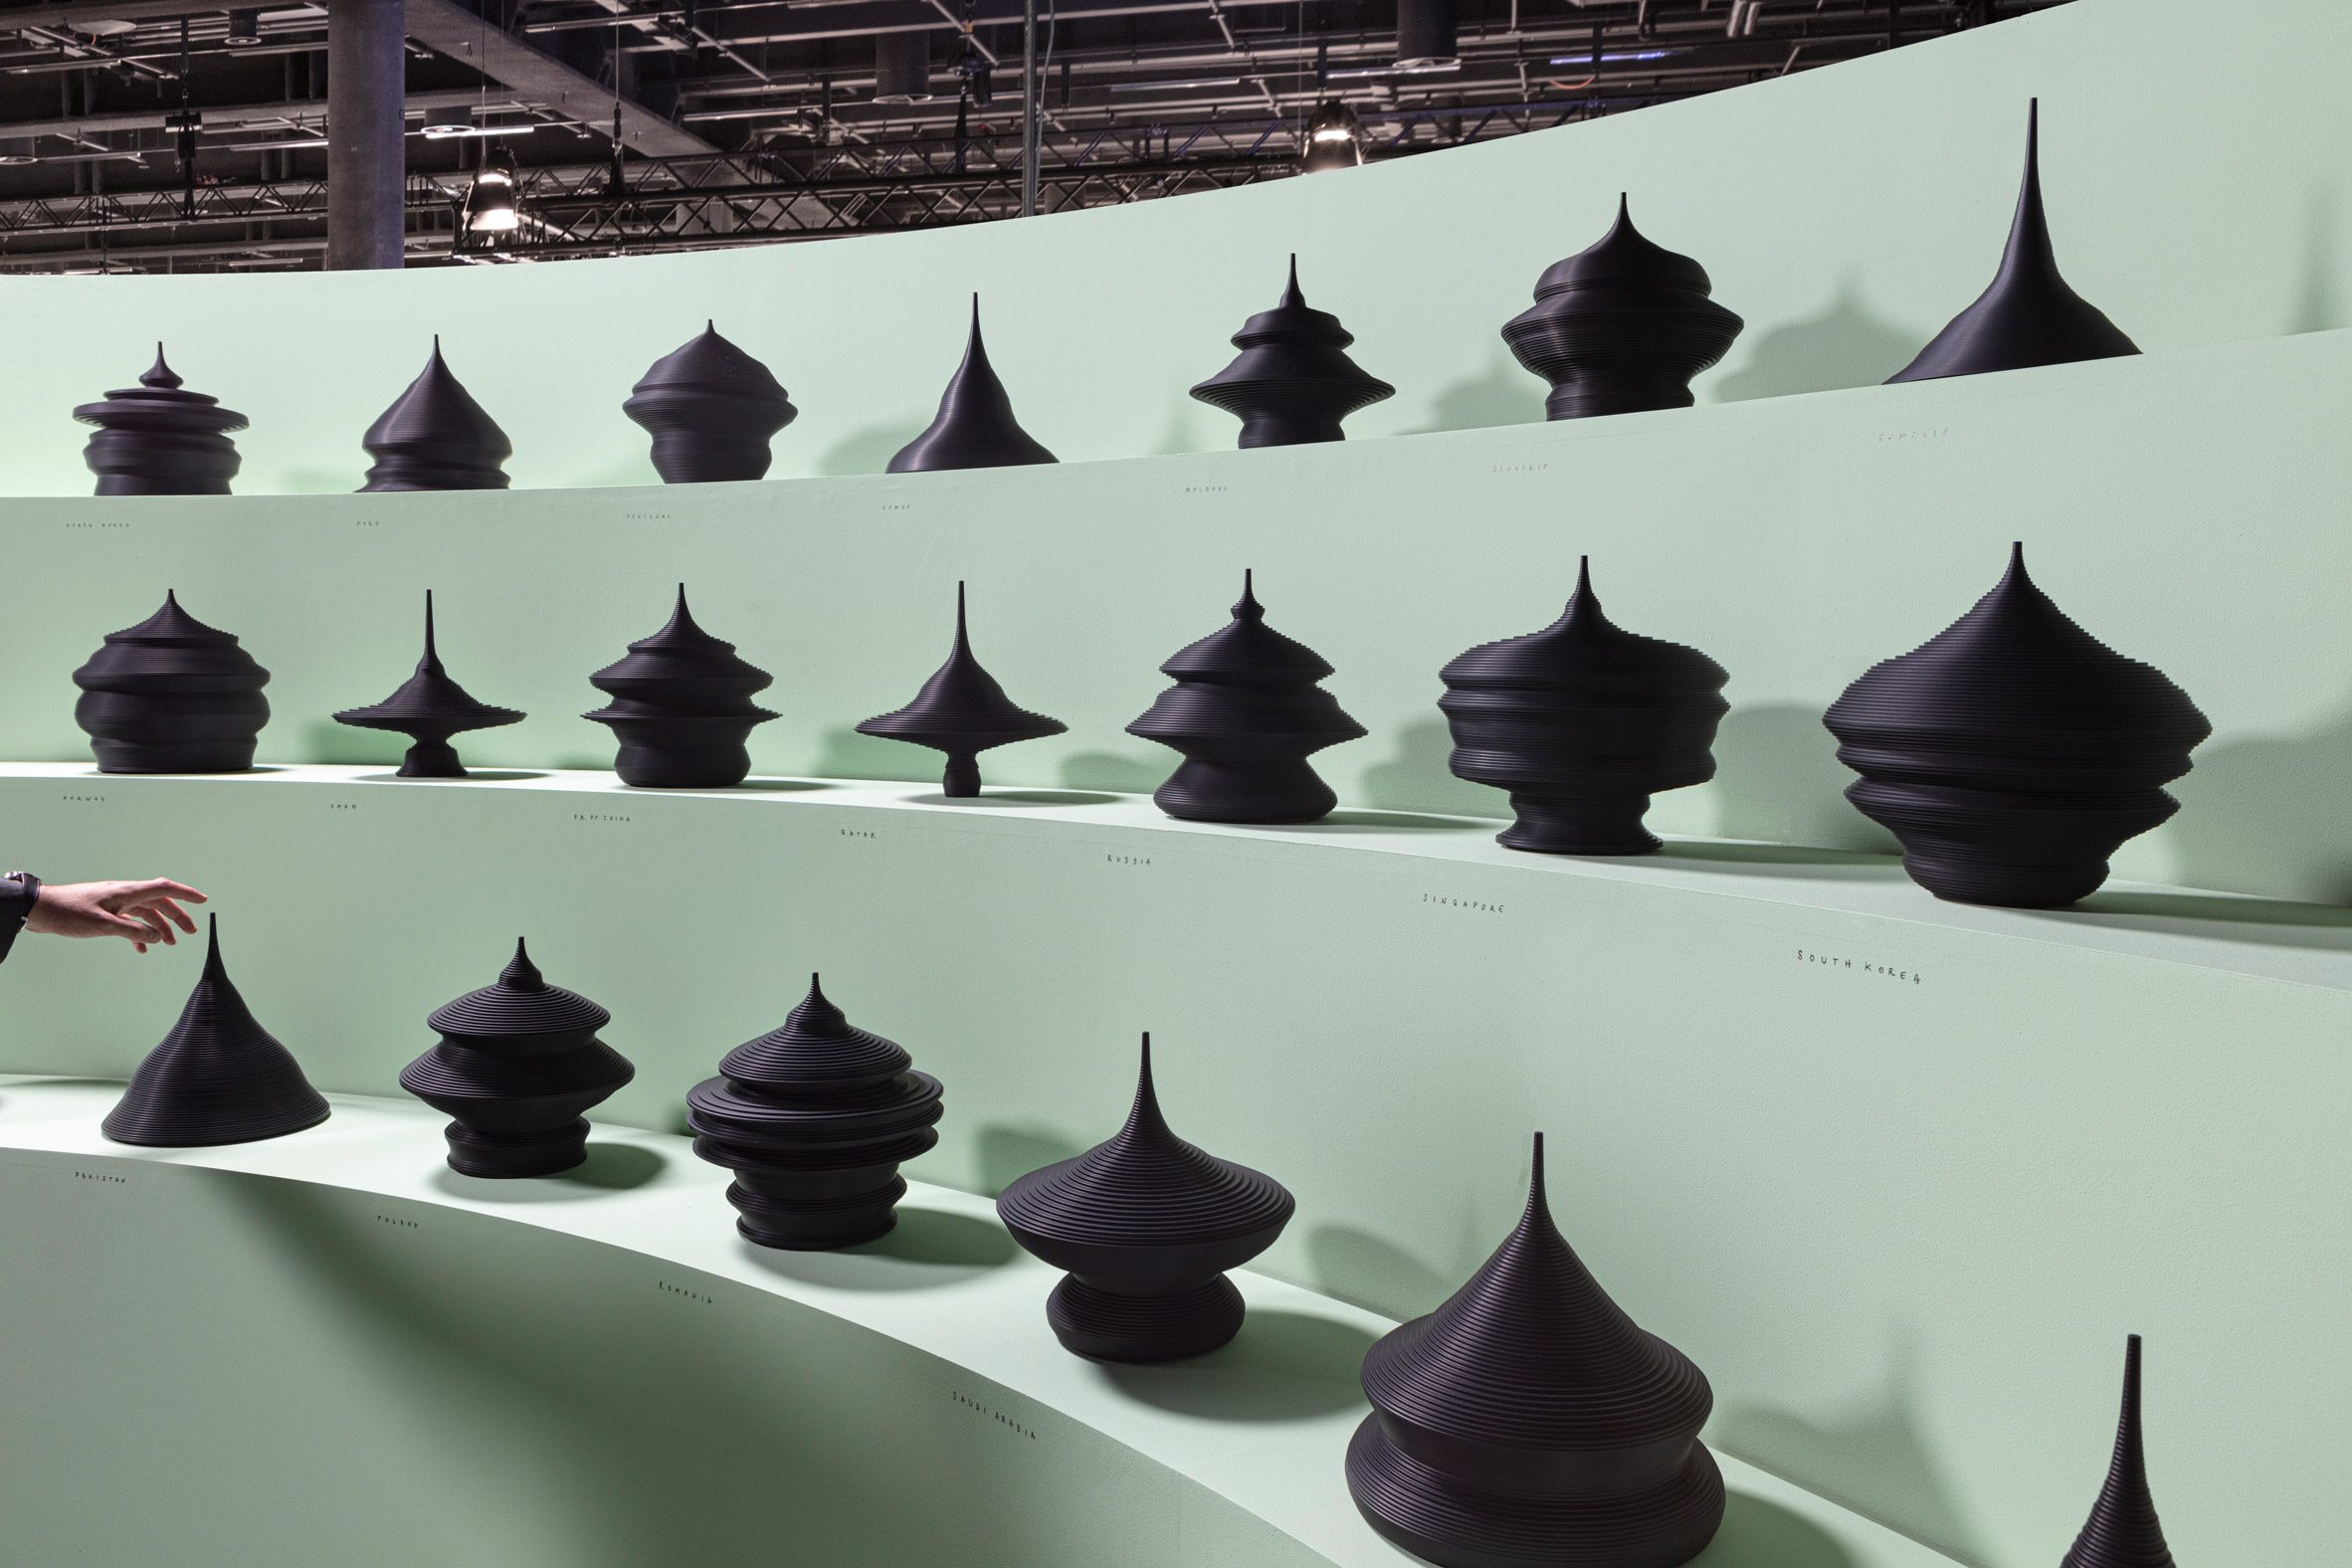 Rows of black sculptures by Mathieu Lehanneur